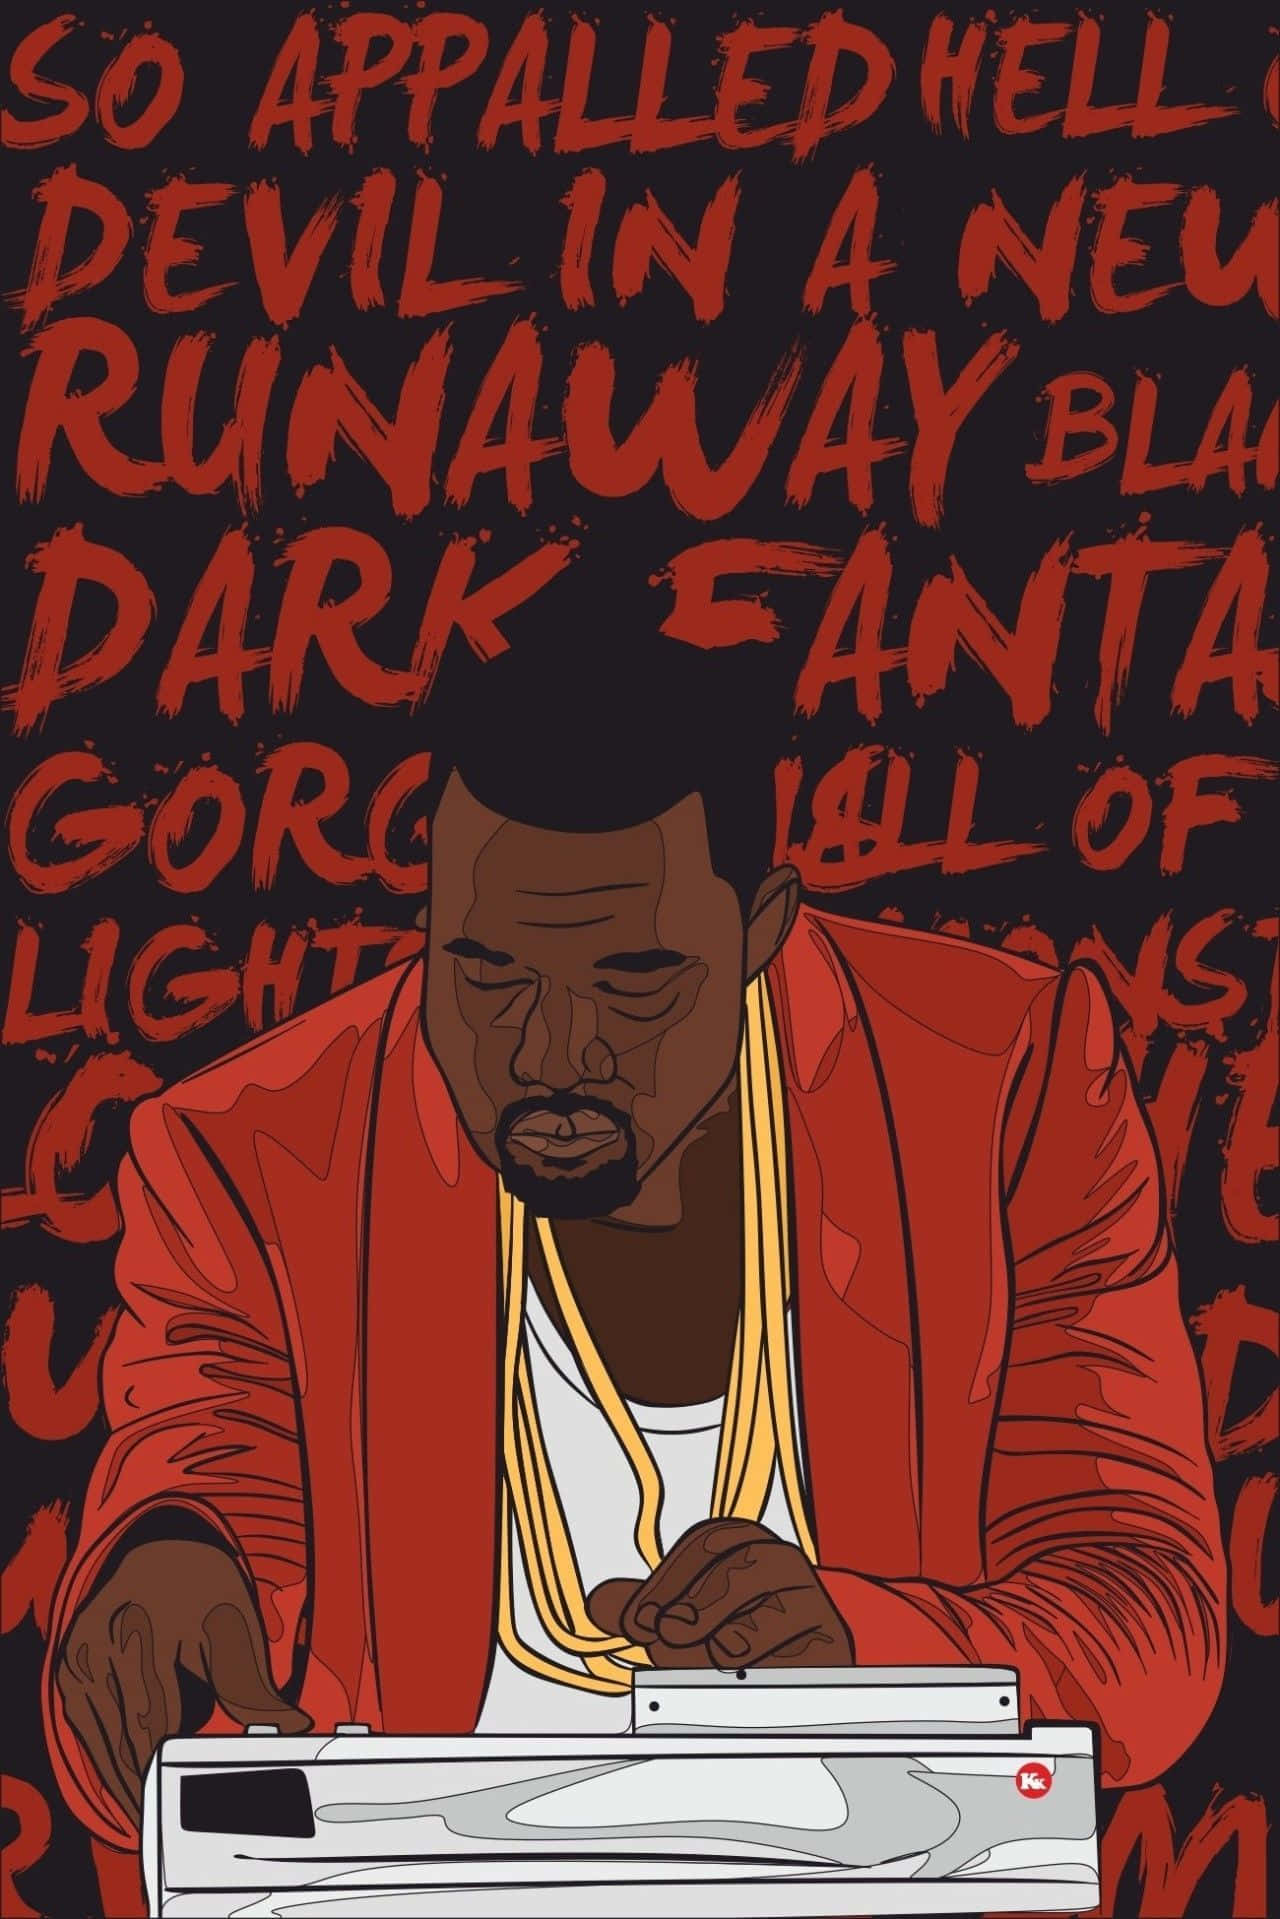 Kanye West  My Beautiful Dark Twisted Fantasy  Beautiful dark twisted  fantasy Dark and twisted Album art